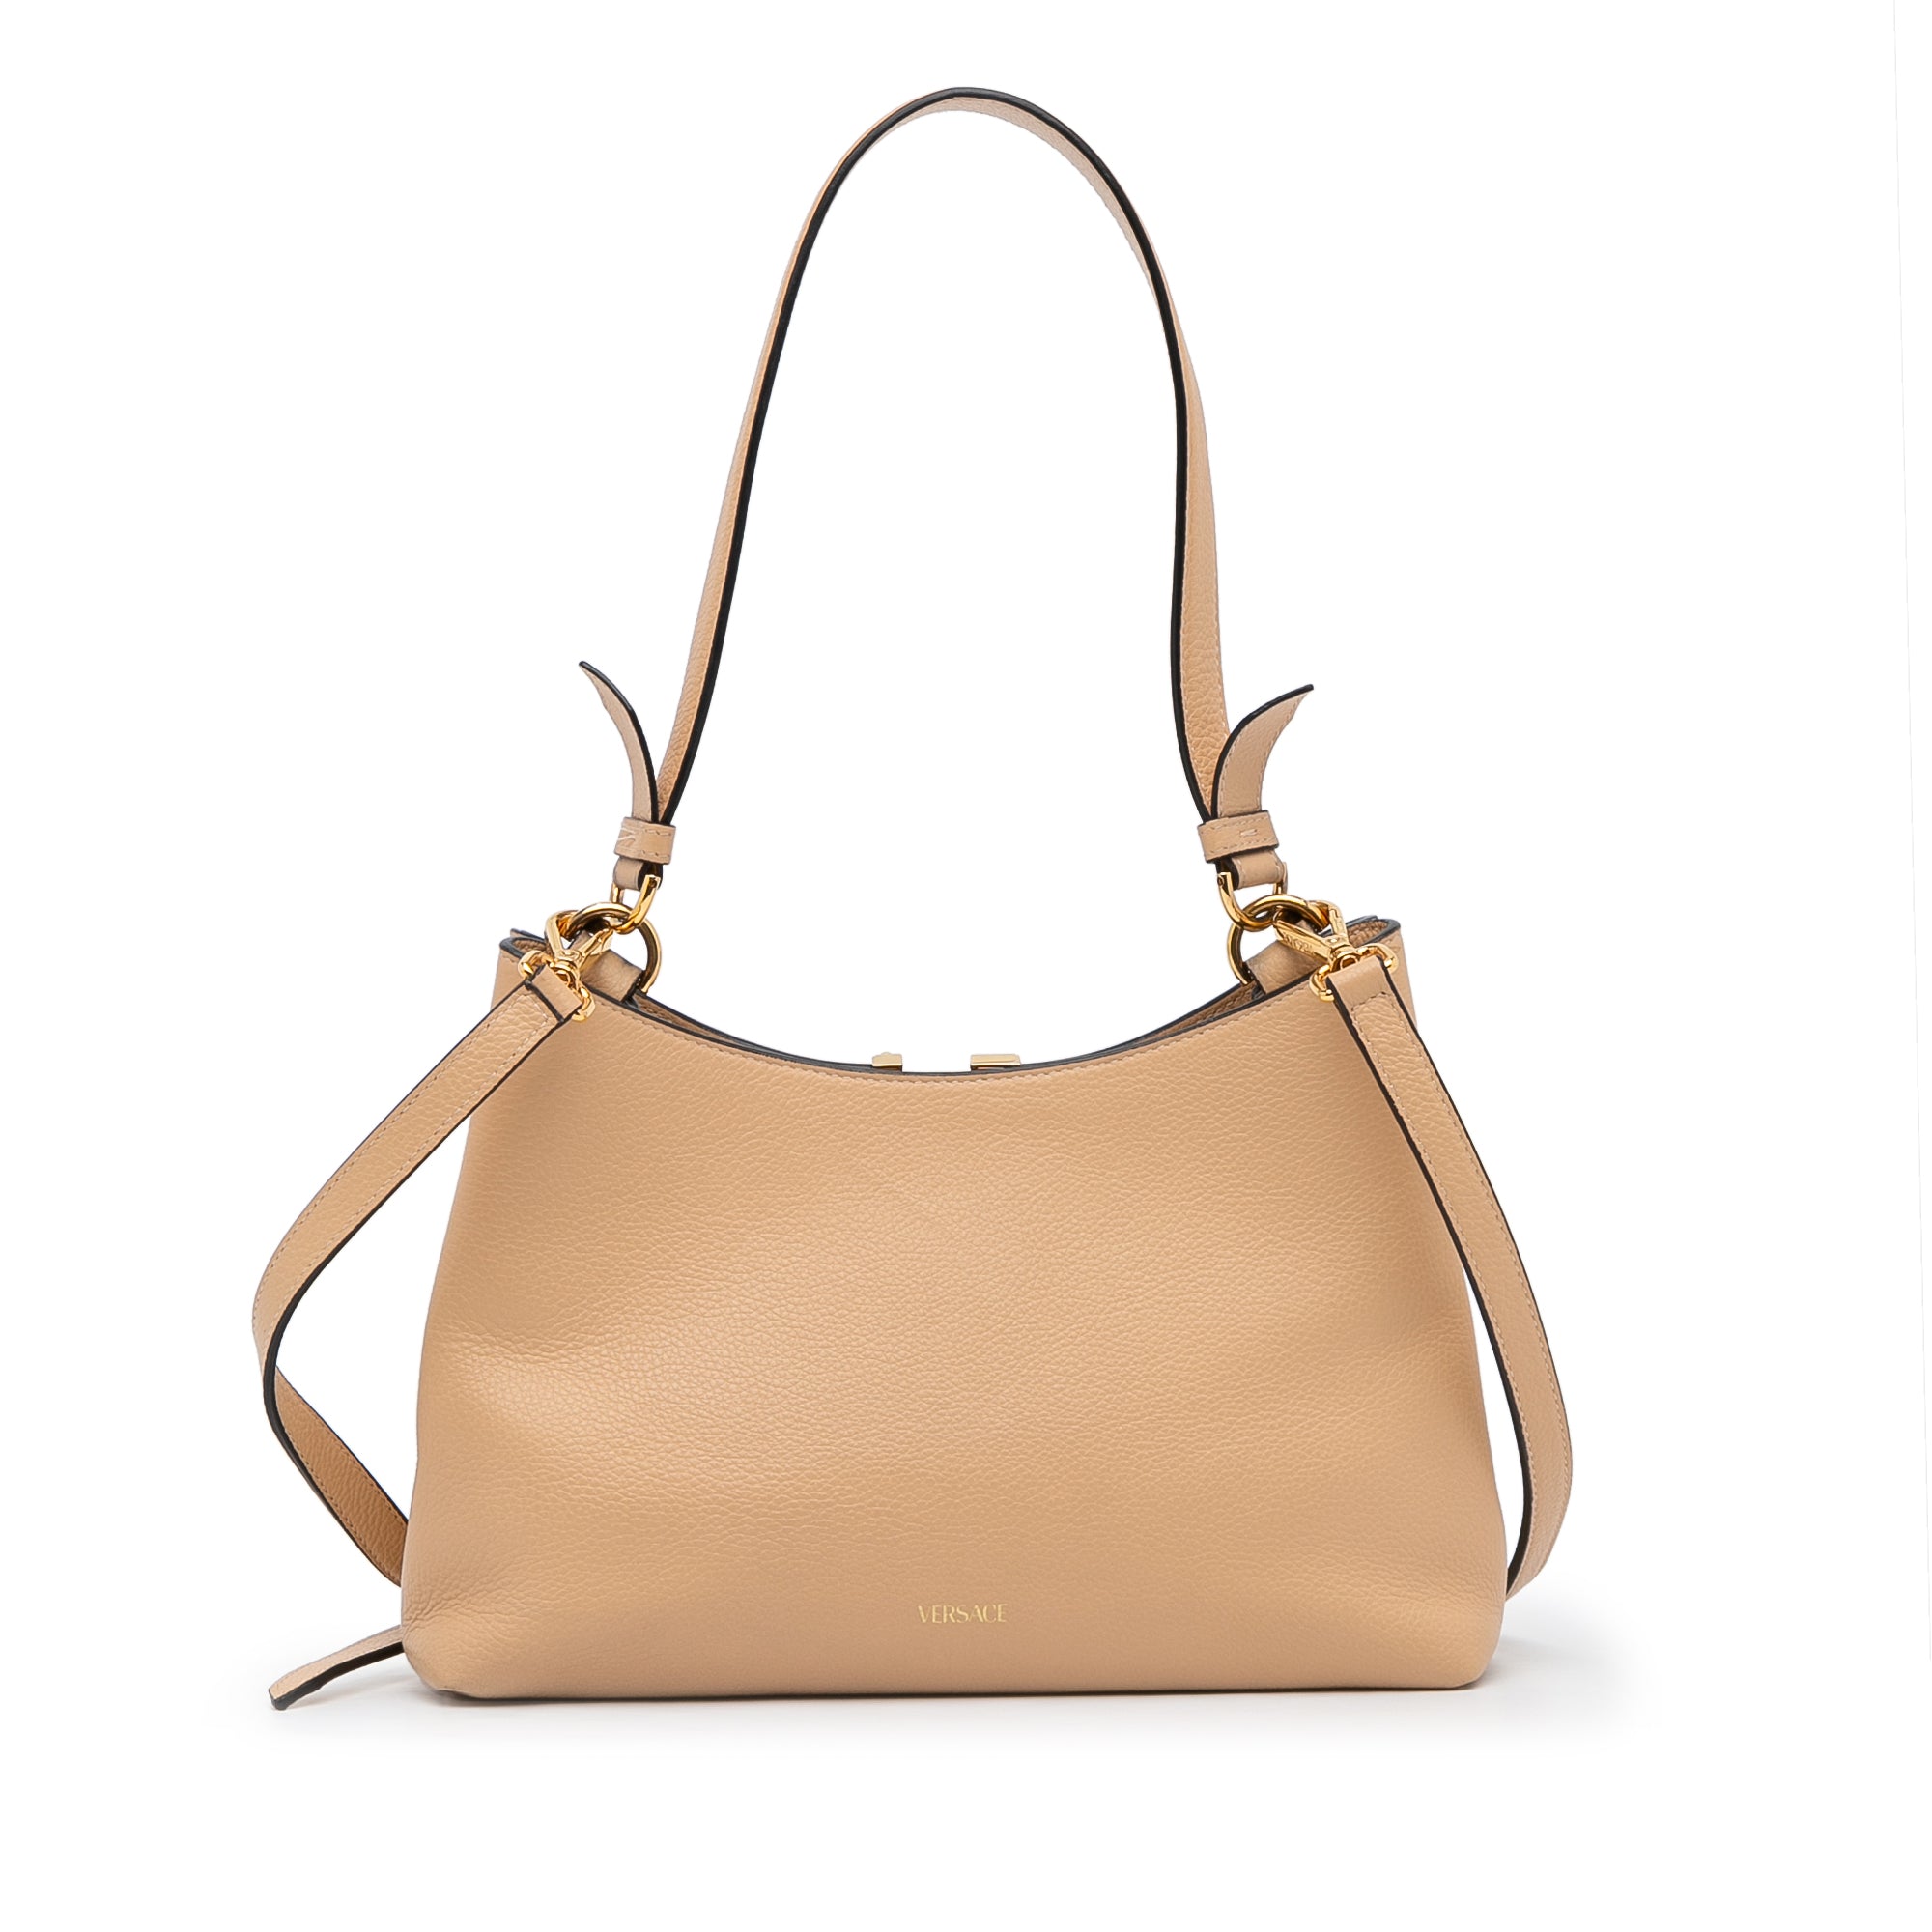 Versace Authenticated Virtus Leather Handbag